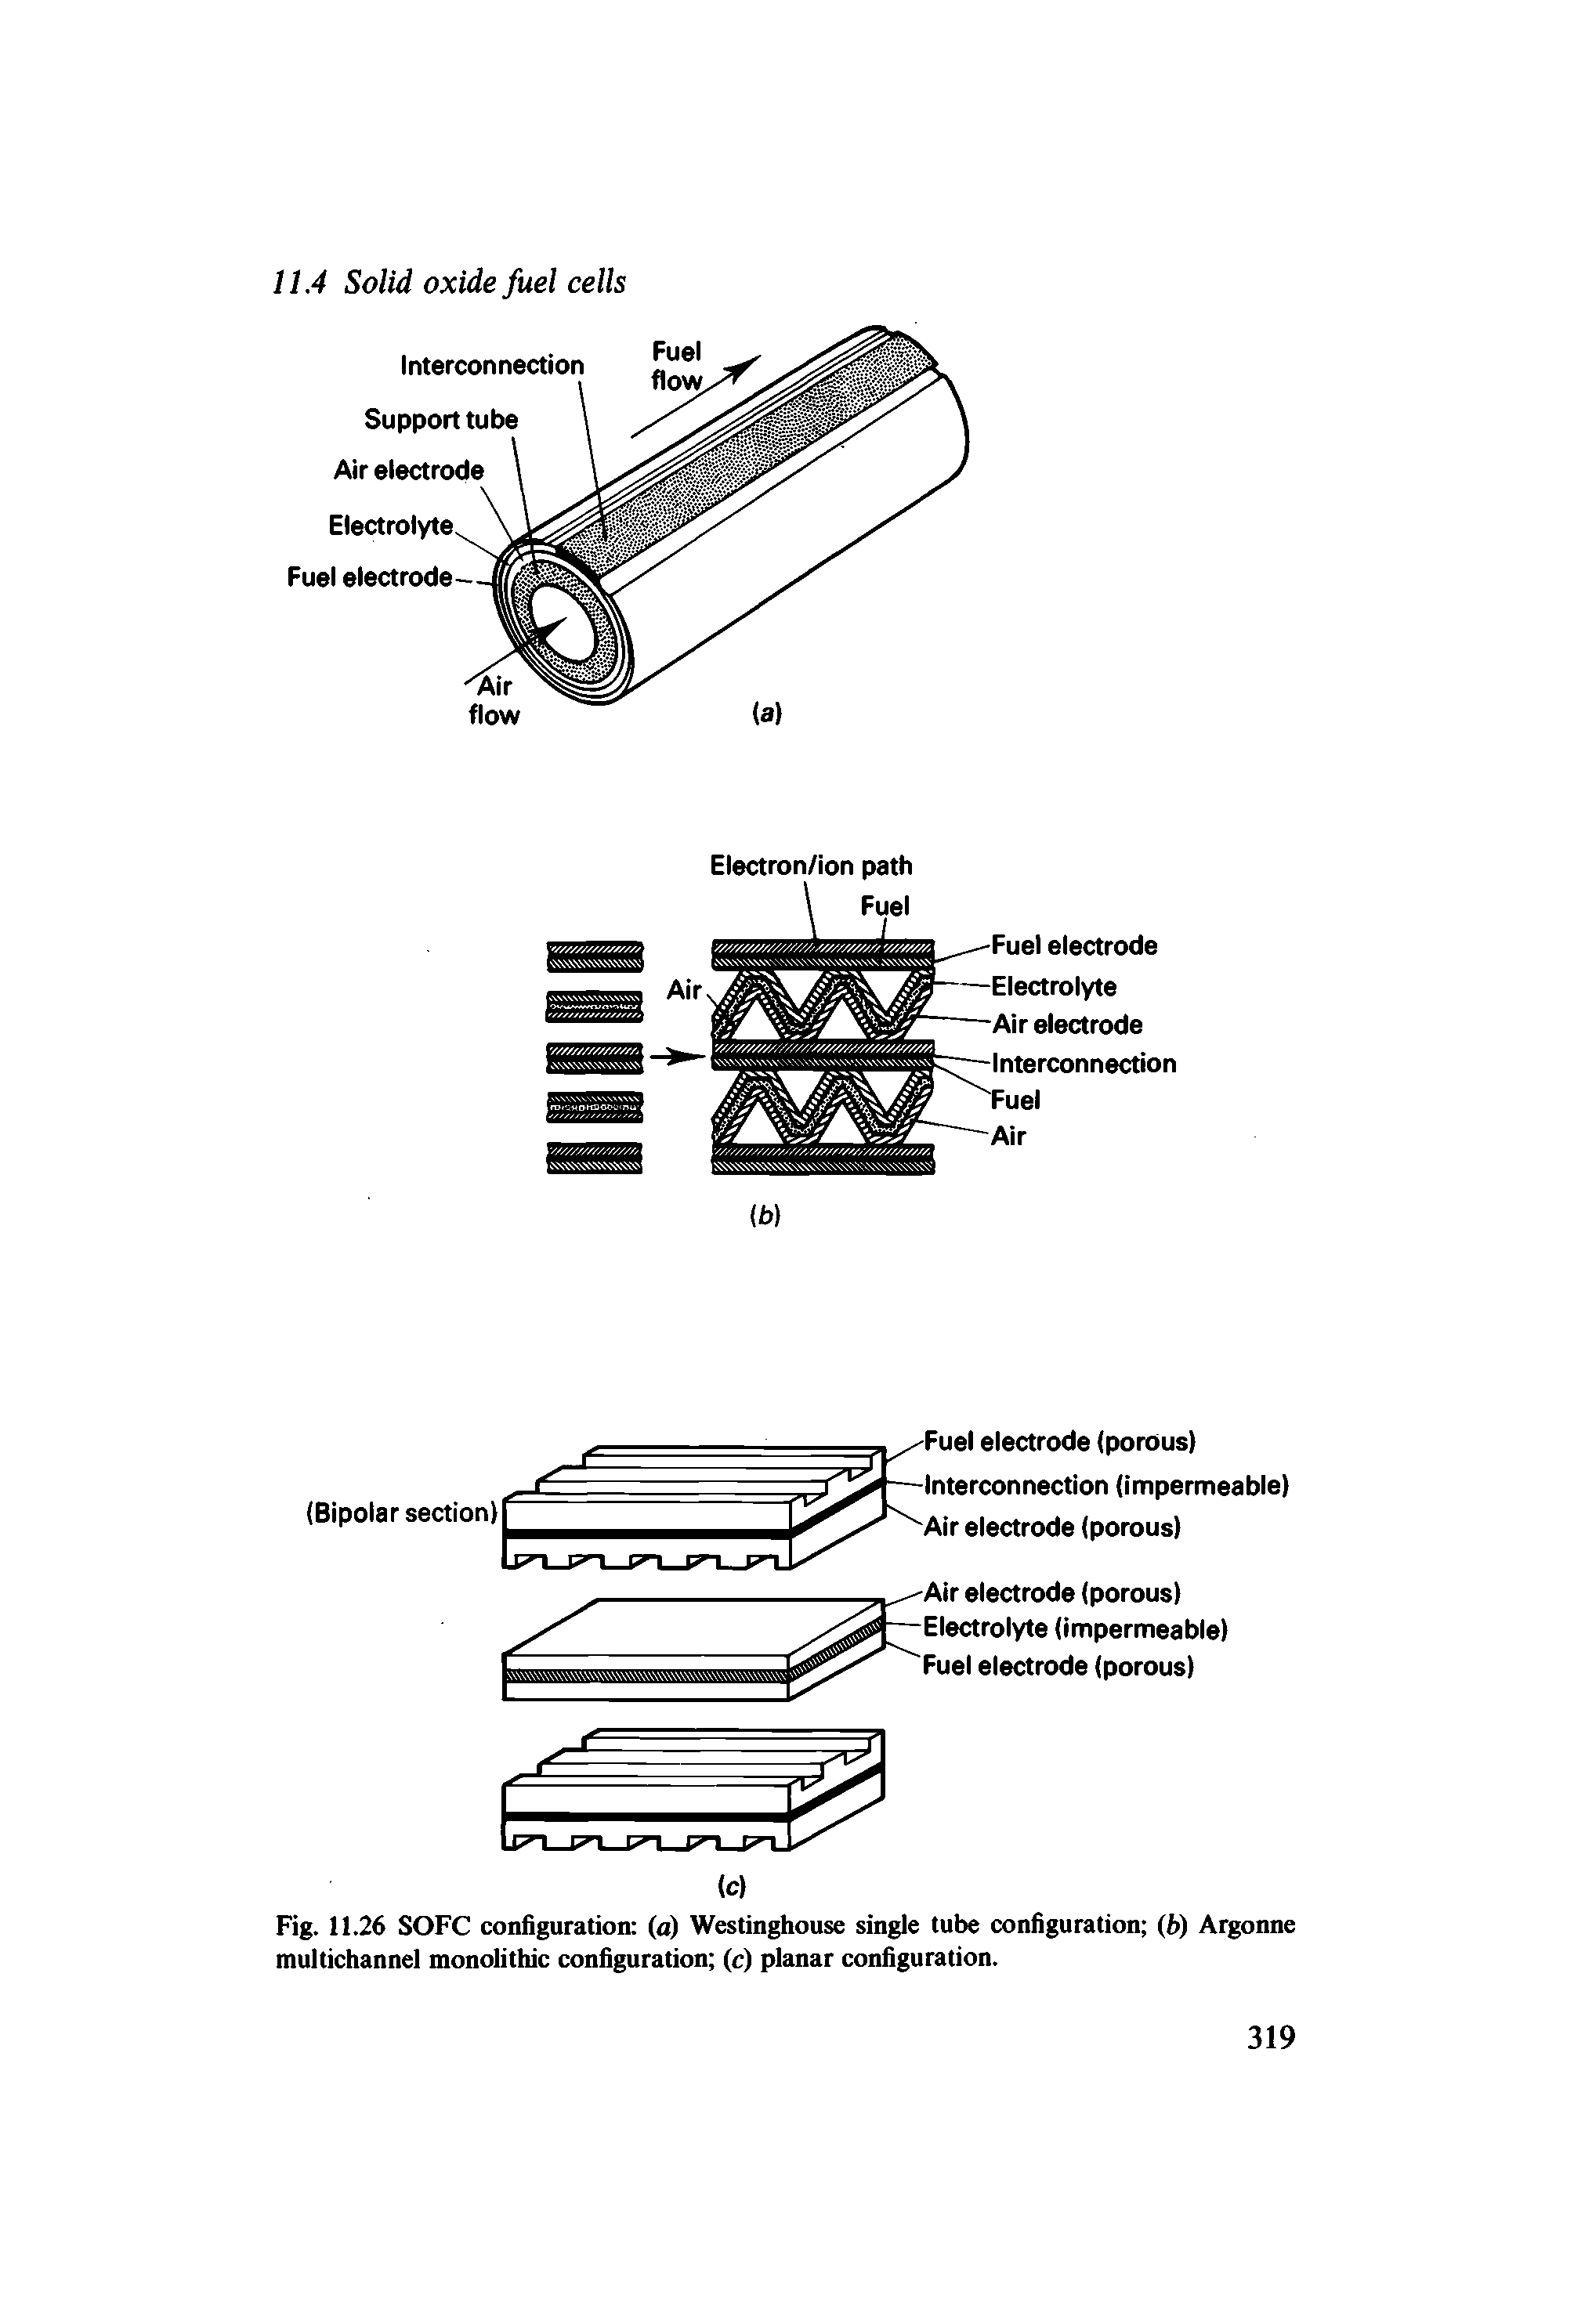 Fig. 11.26 SOFC configuration (a) Westinghouse single tube configuration (b) Argonne multichannel monolithic configuration (c) planar configuration.